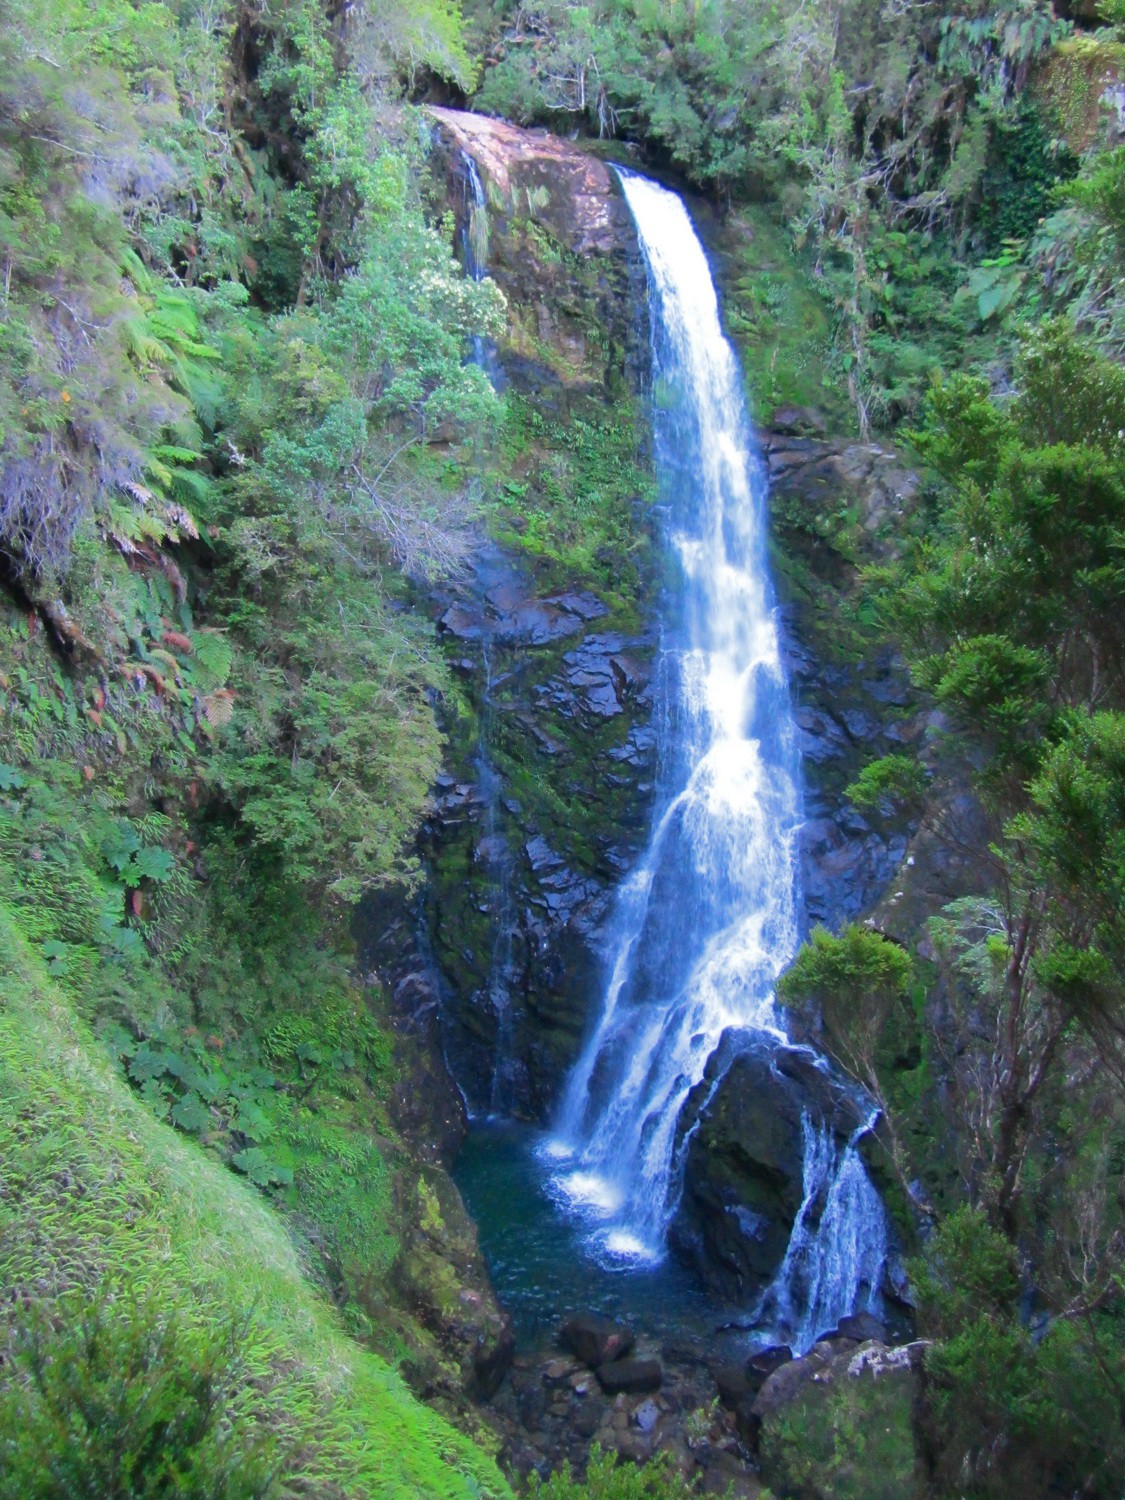 The upper waterfall Cascada Alta